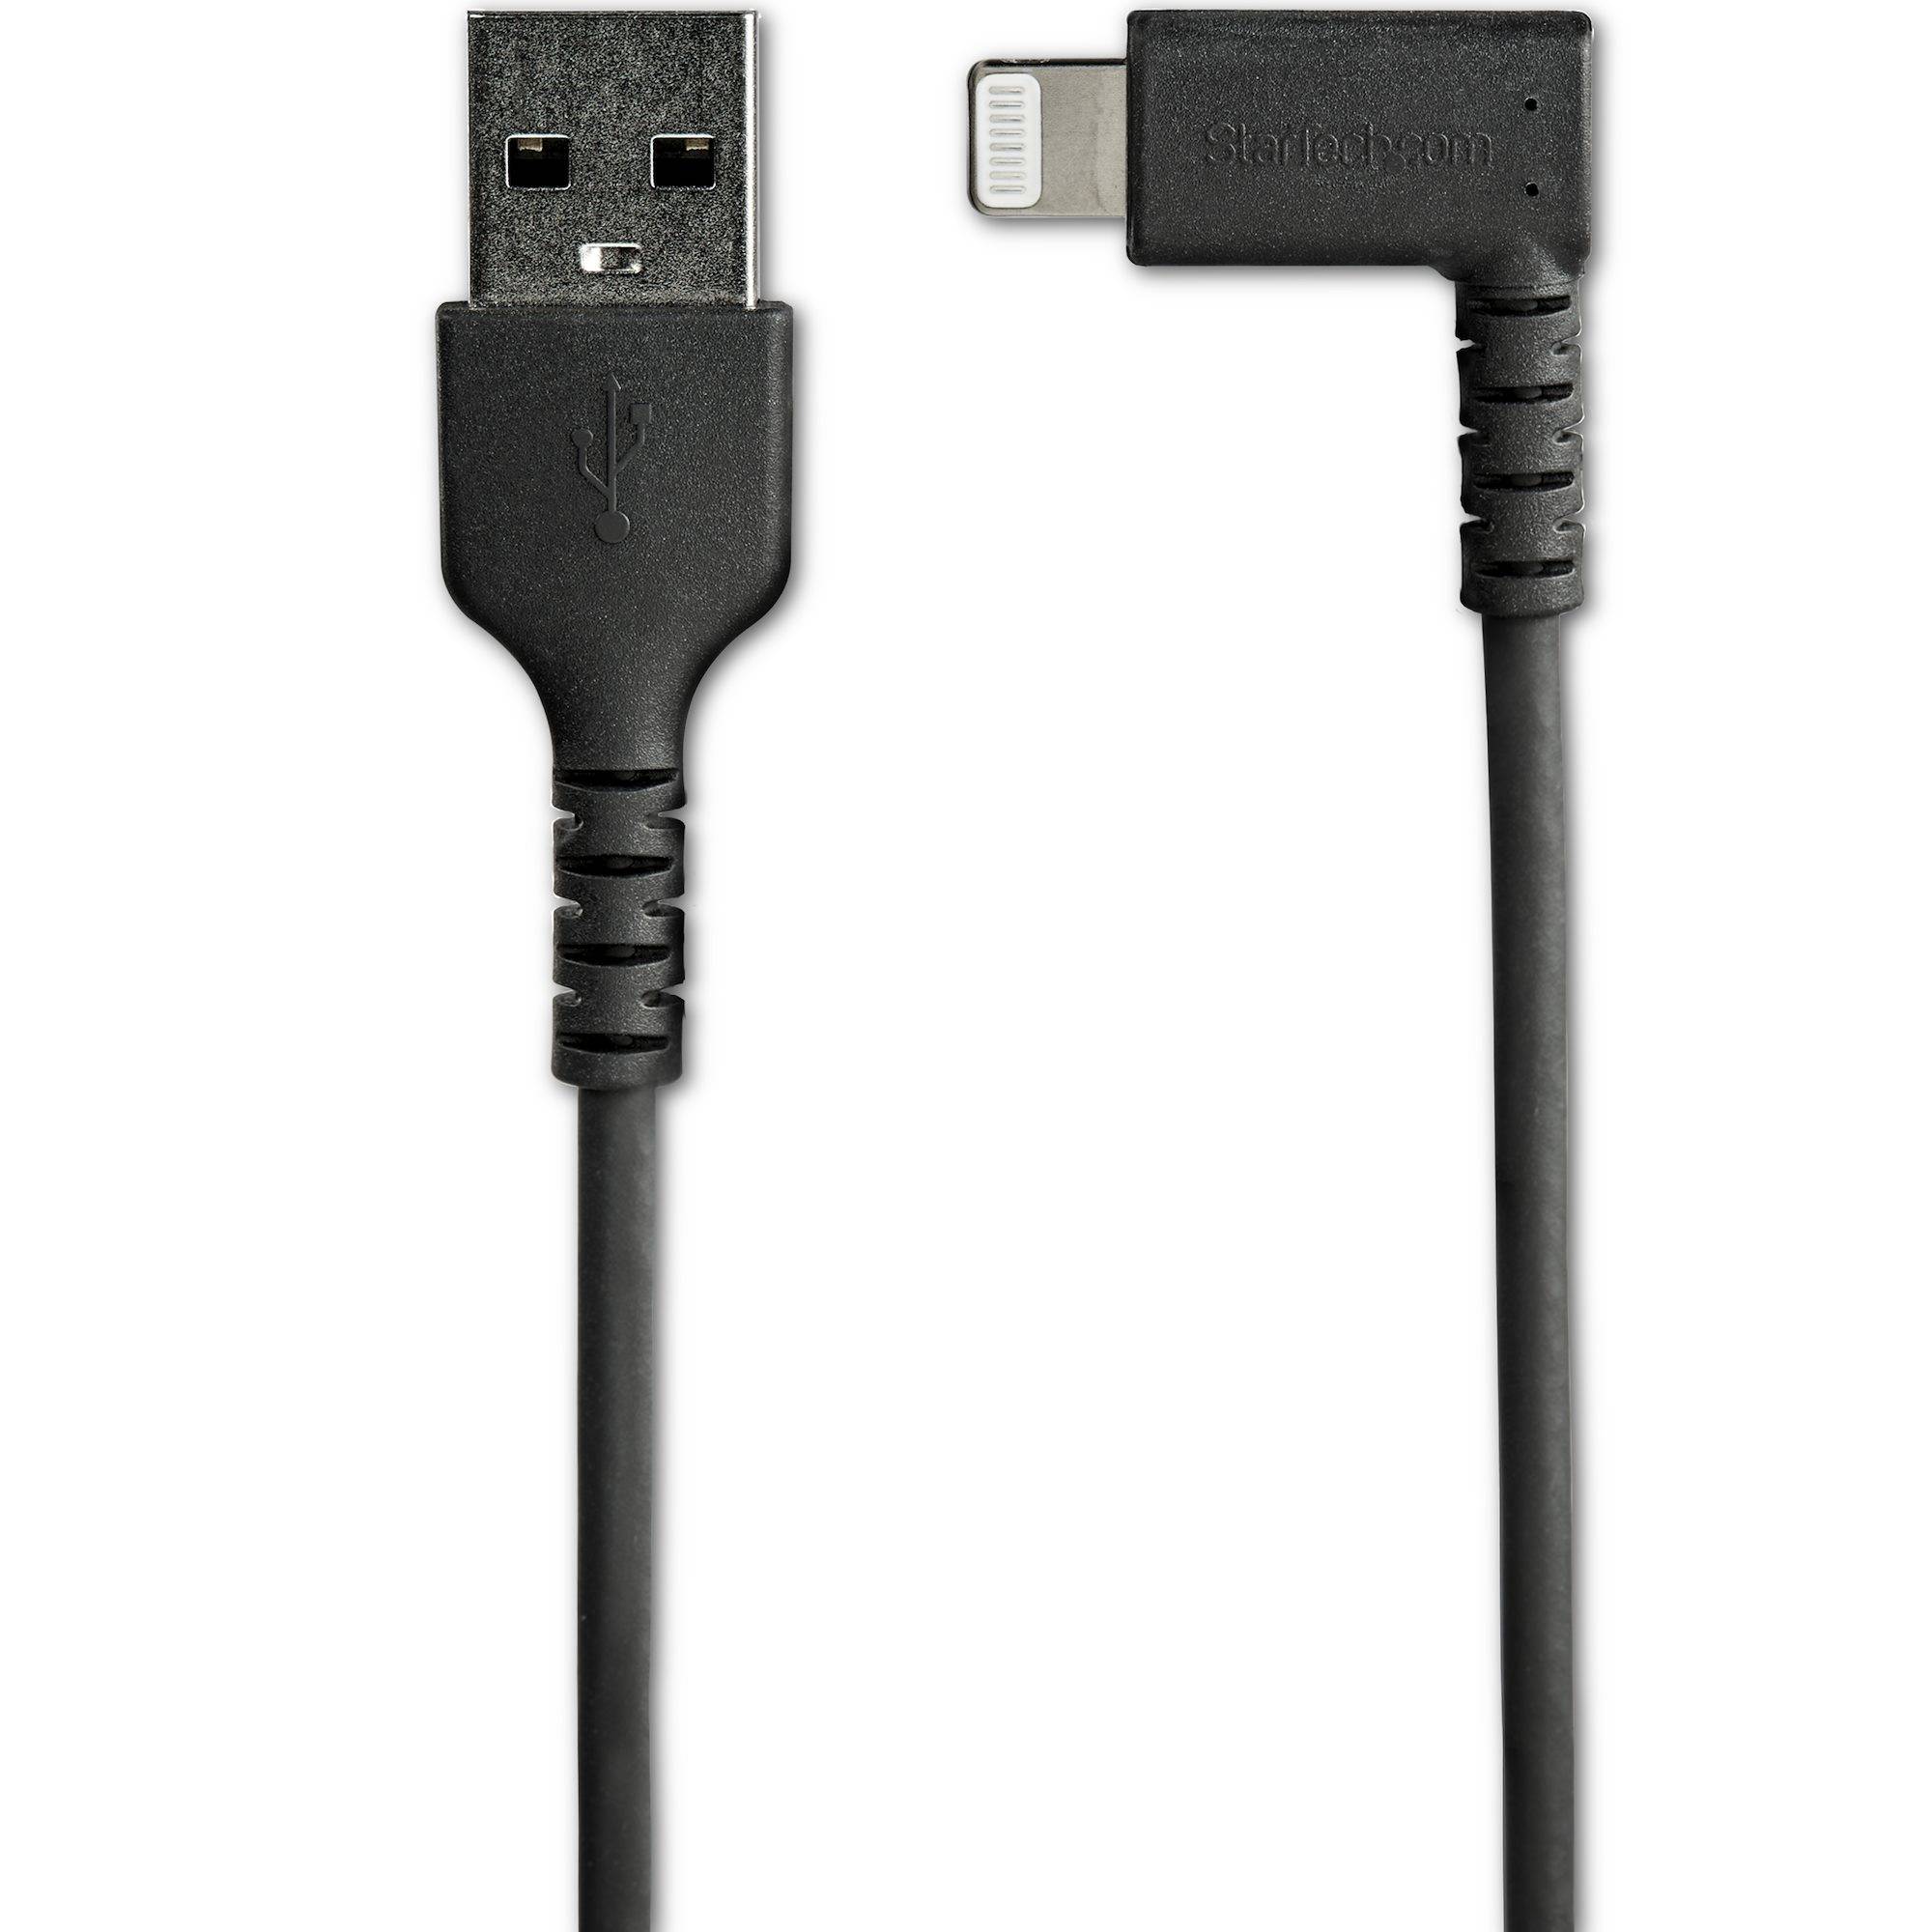 Rca Informatique - image du produit : 2M ANGLED LIGHTNING TO USB CABLE-APPLE MFI CERTIFIED-BLACK